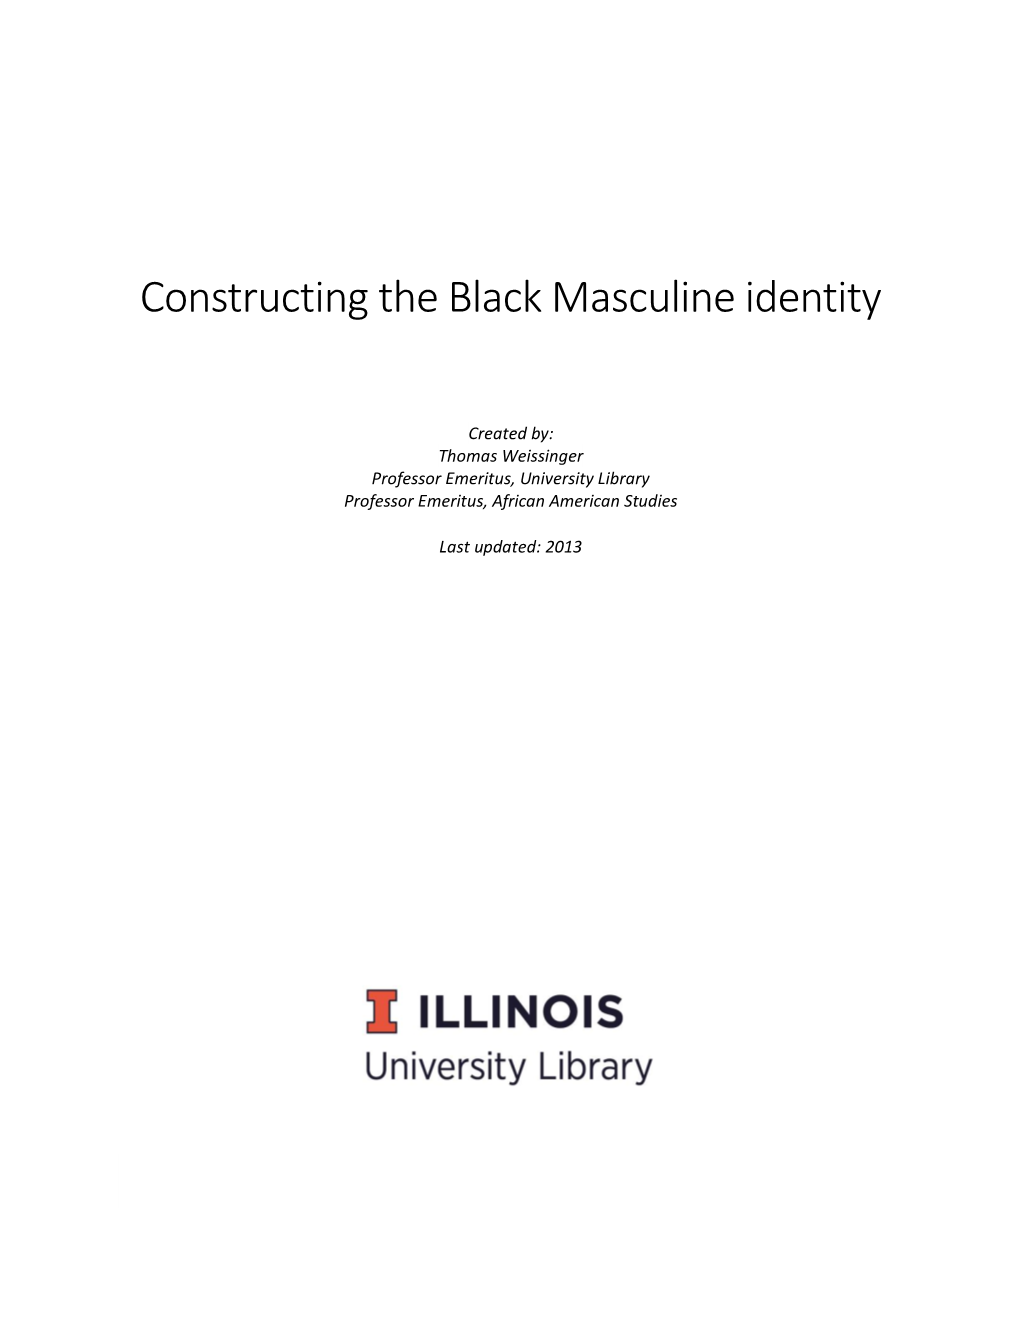 Constructing the Black Masculine Identity